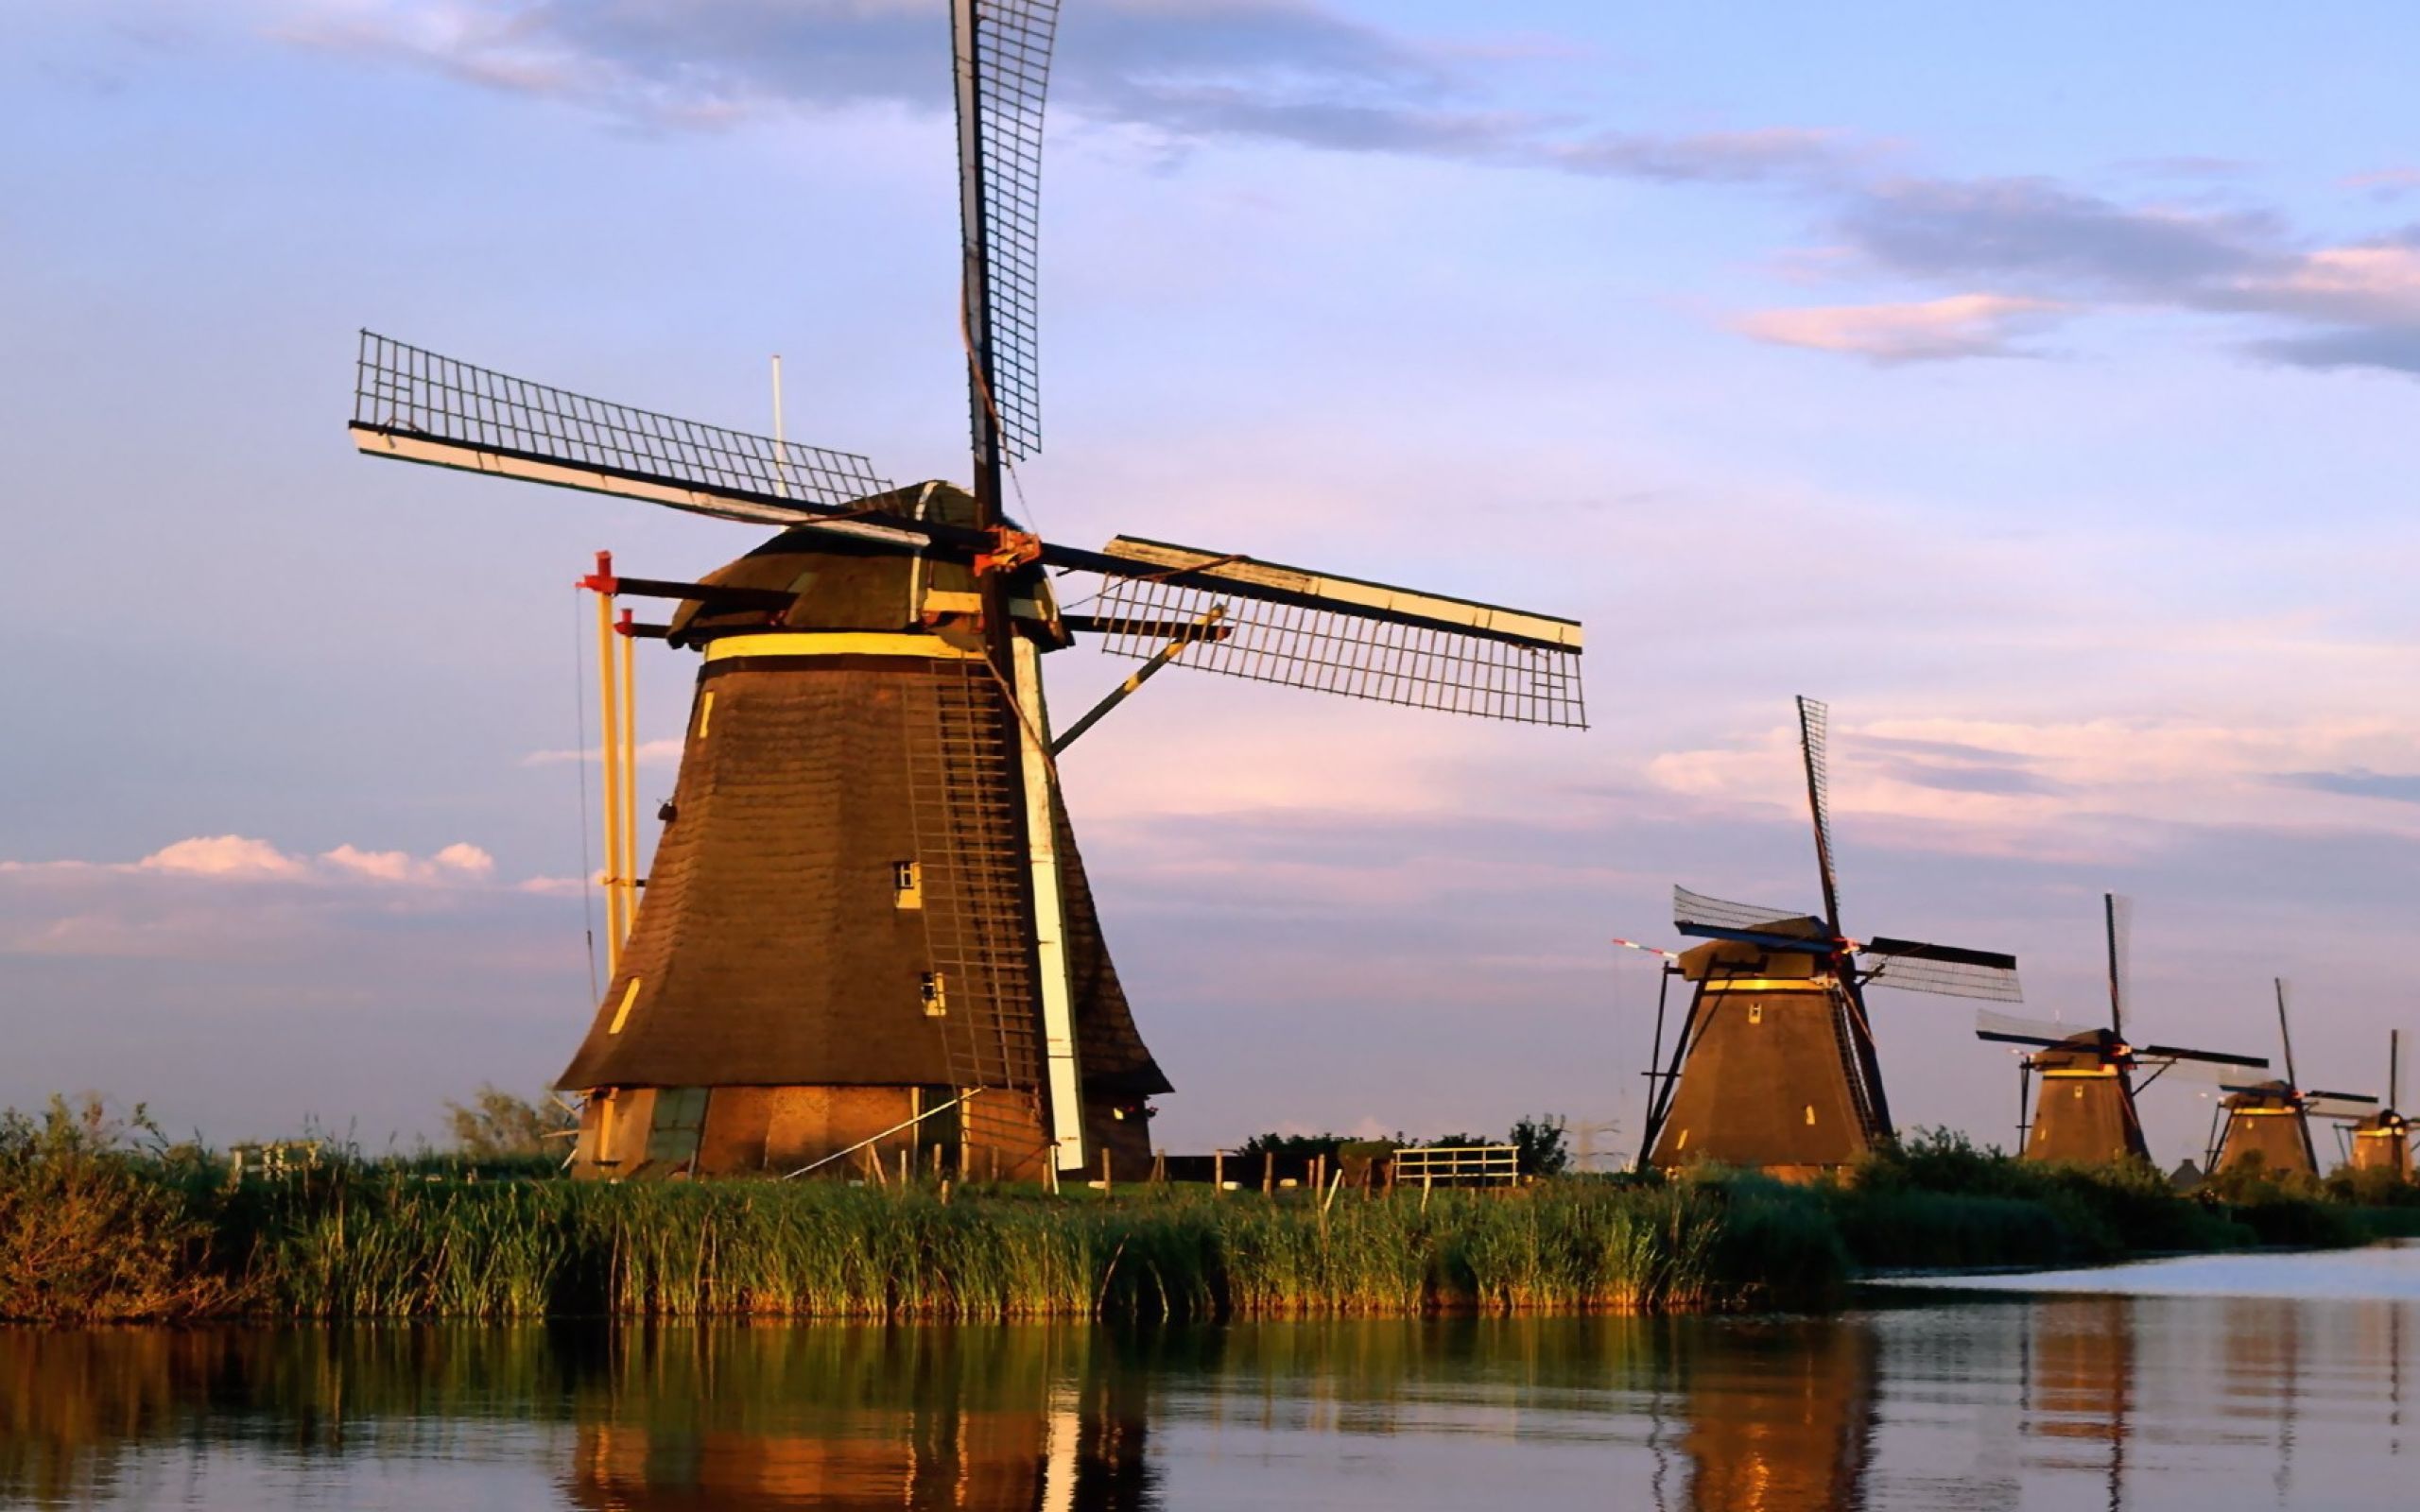 Мельница корабли. Киндердейк Нидерланды. Ветряная мельница Нидерланды. Мельницы в Киндердейке Нидерланды. Королевство Нидерланды Ветряные мельницы.